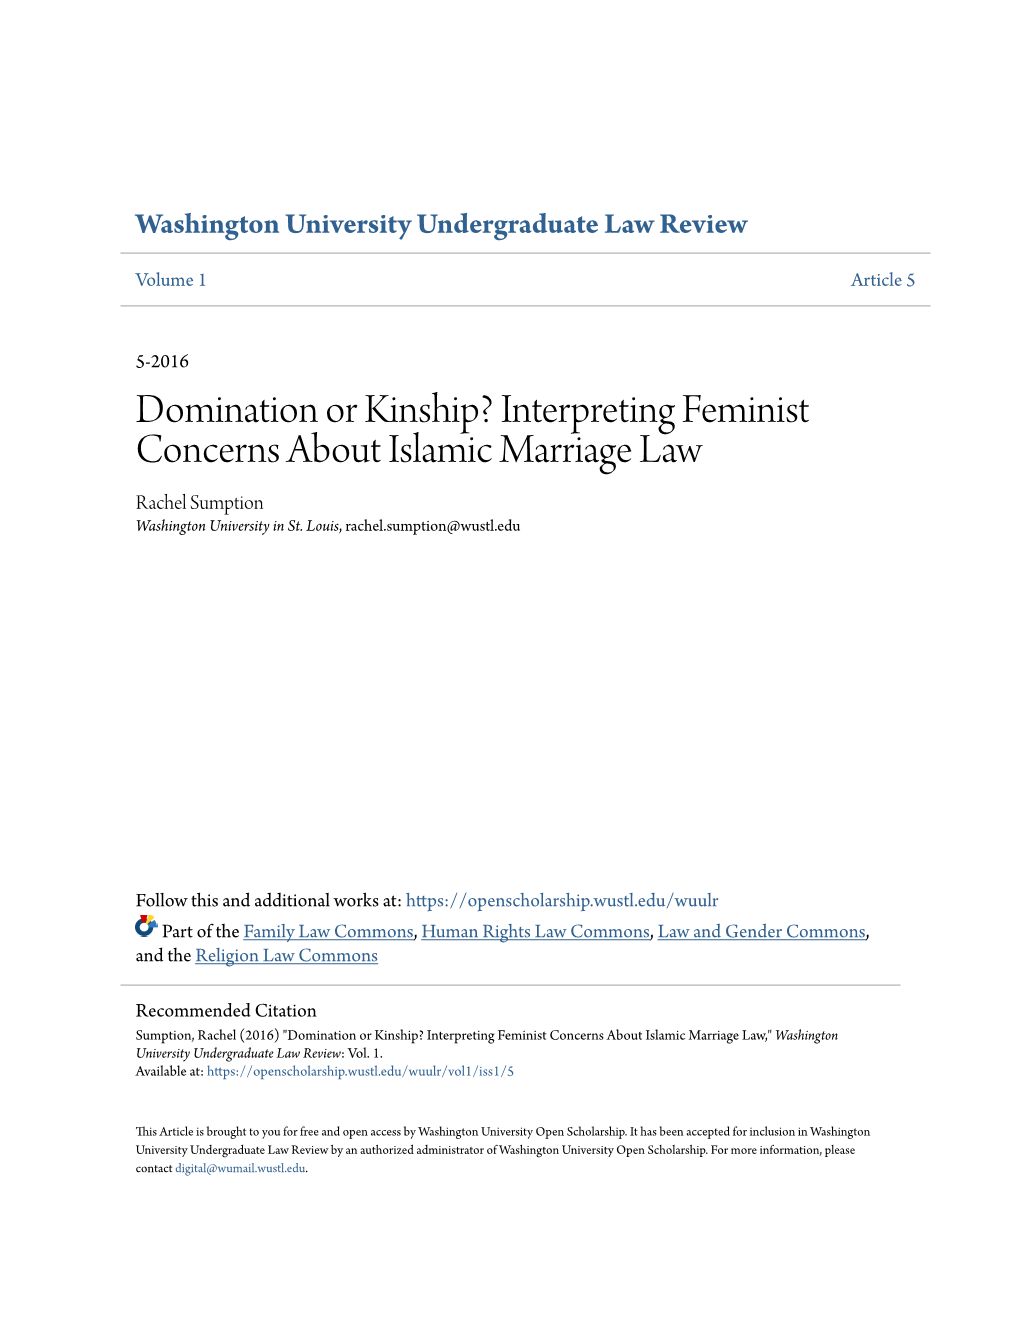 Interpreting Feminist Concerns About Islamic Marriage Law Rachel Sumption Washington University in St